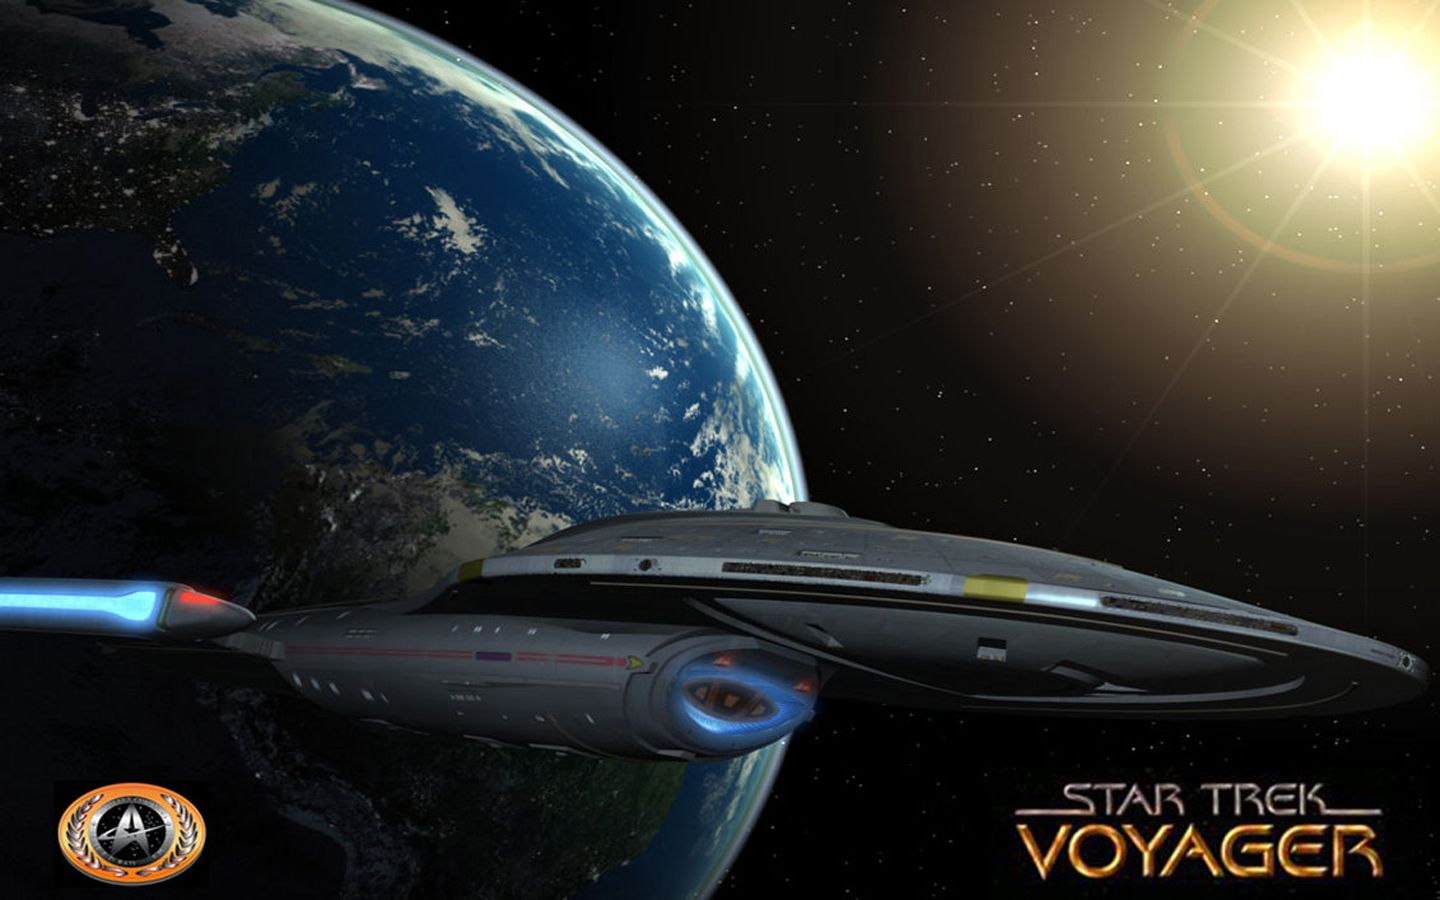 Star Trek Voyager Wallpaper 1440×900 | Star Trek Wallpaper